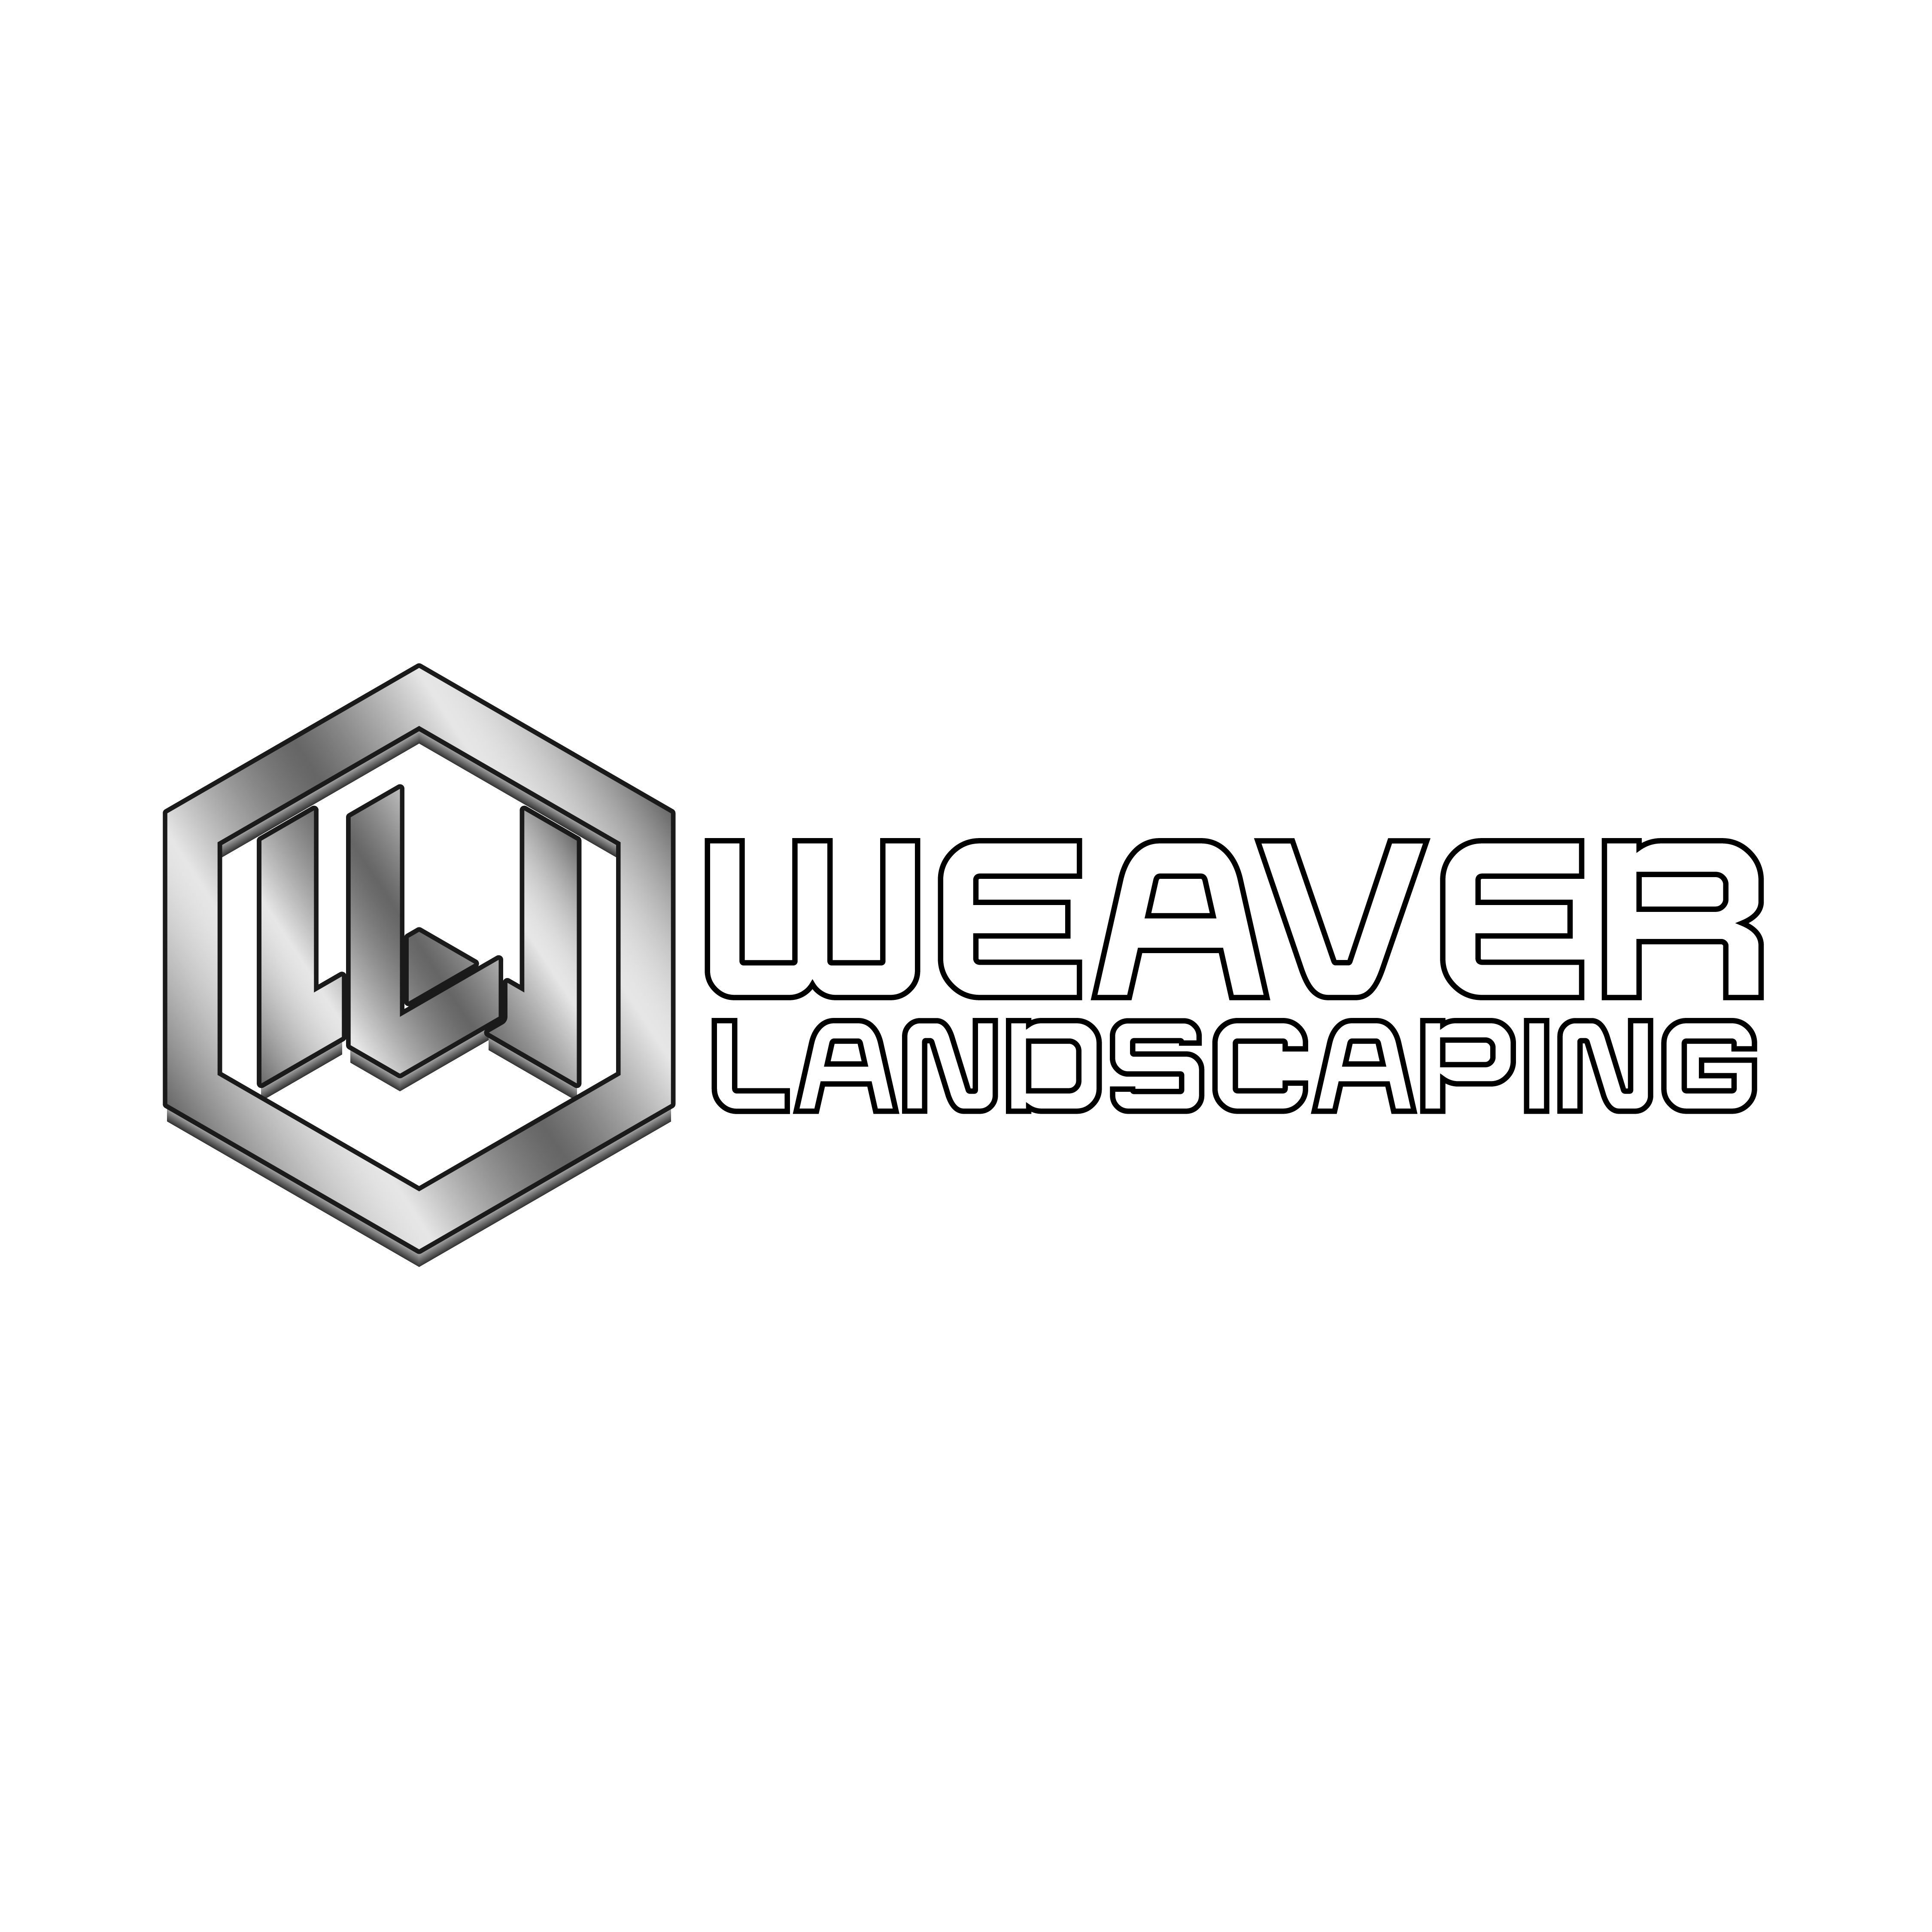 Weaver Landscaping